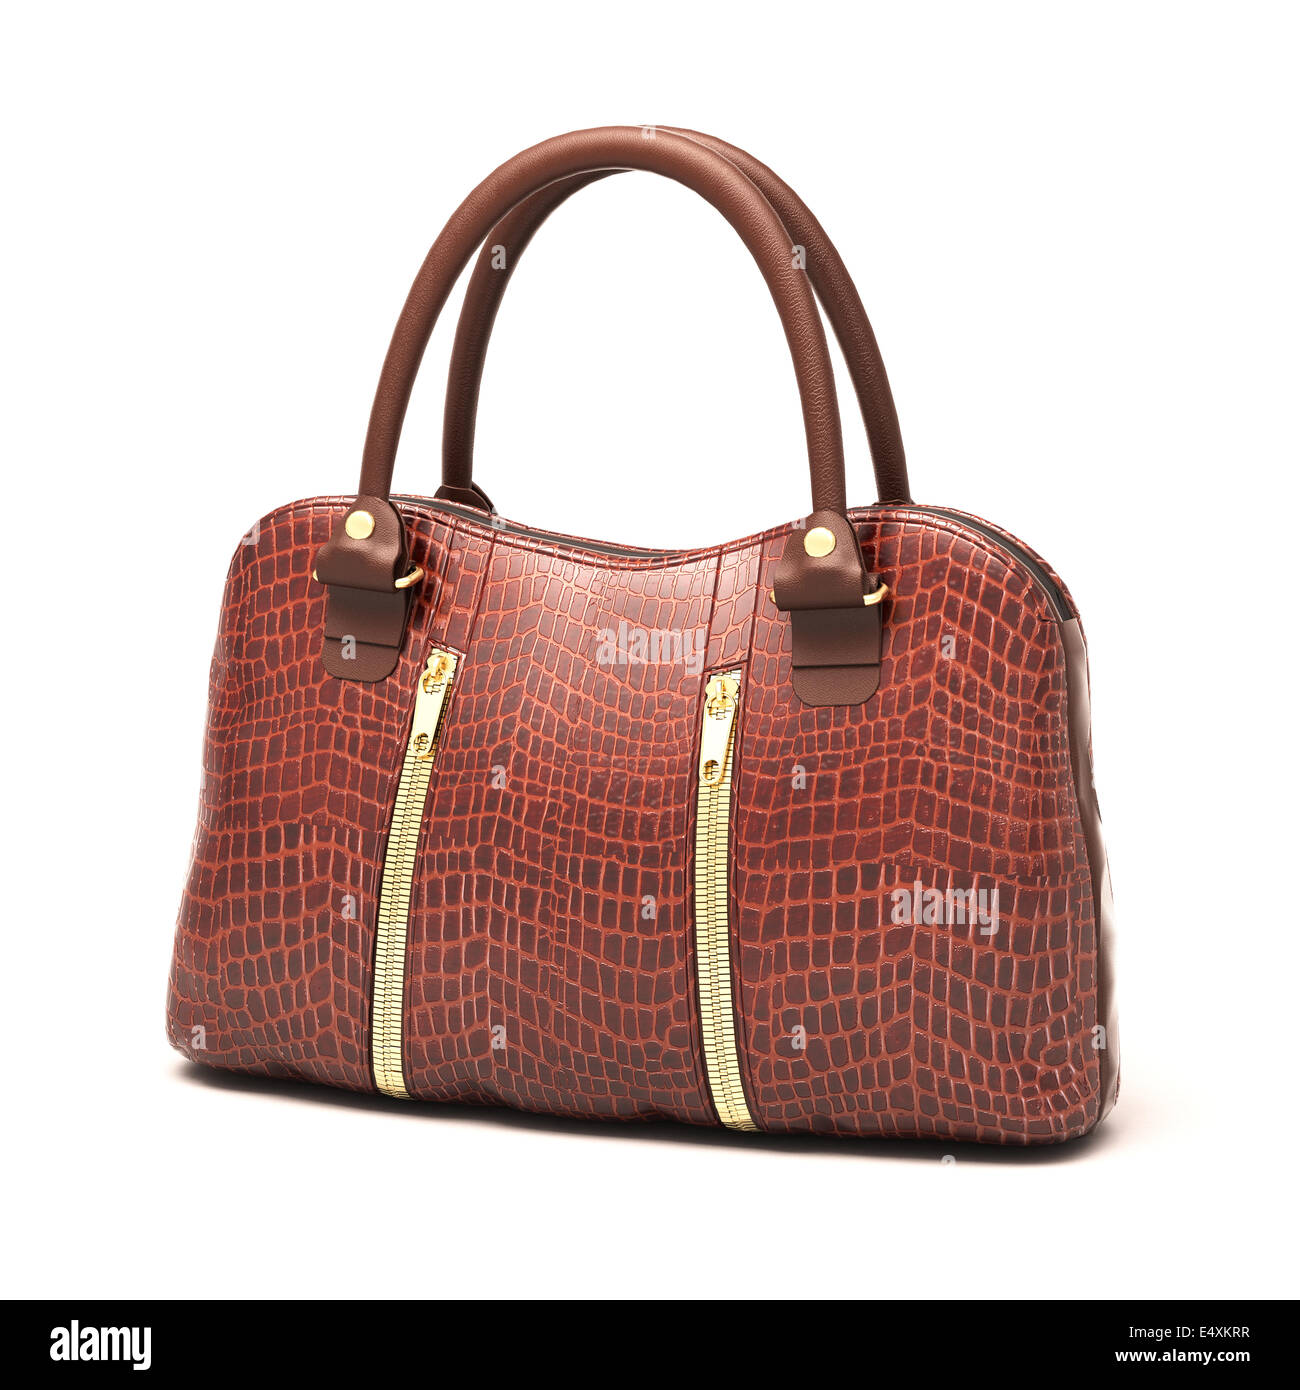 Crocodile handbag hi-res stock photography and images - Alamy